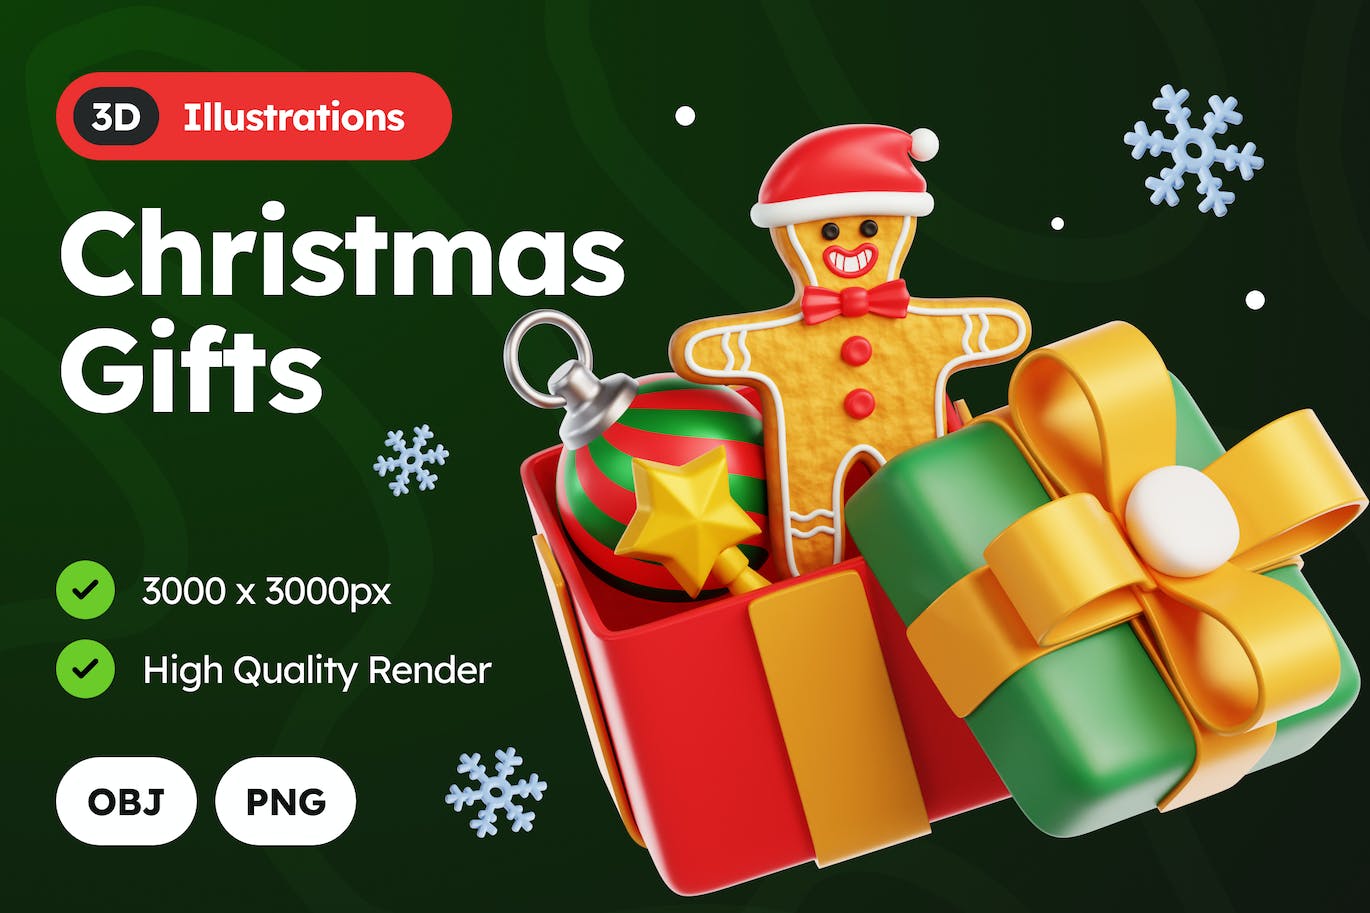 3D 圣诞礼物图 (PNG,OBJ)